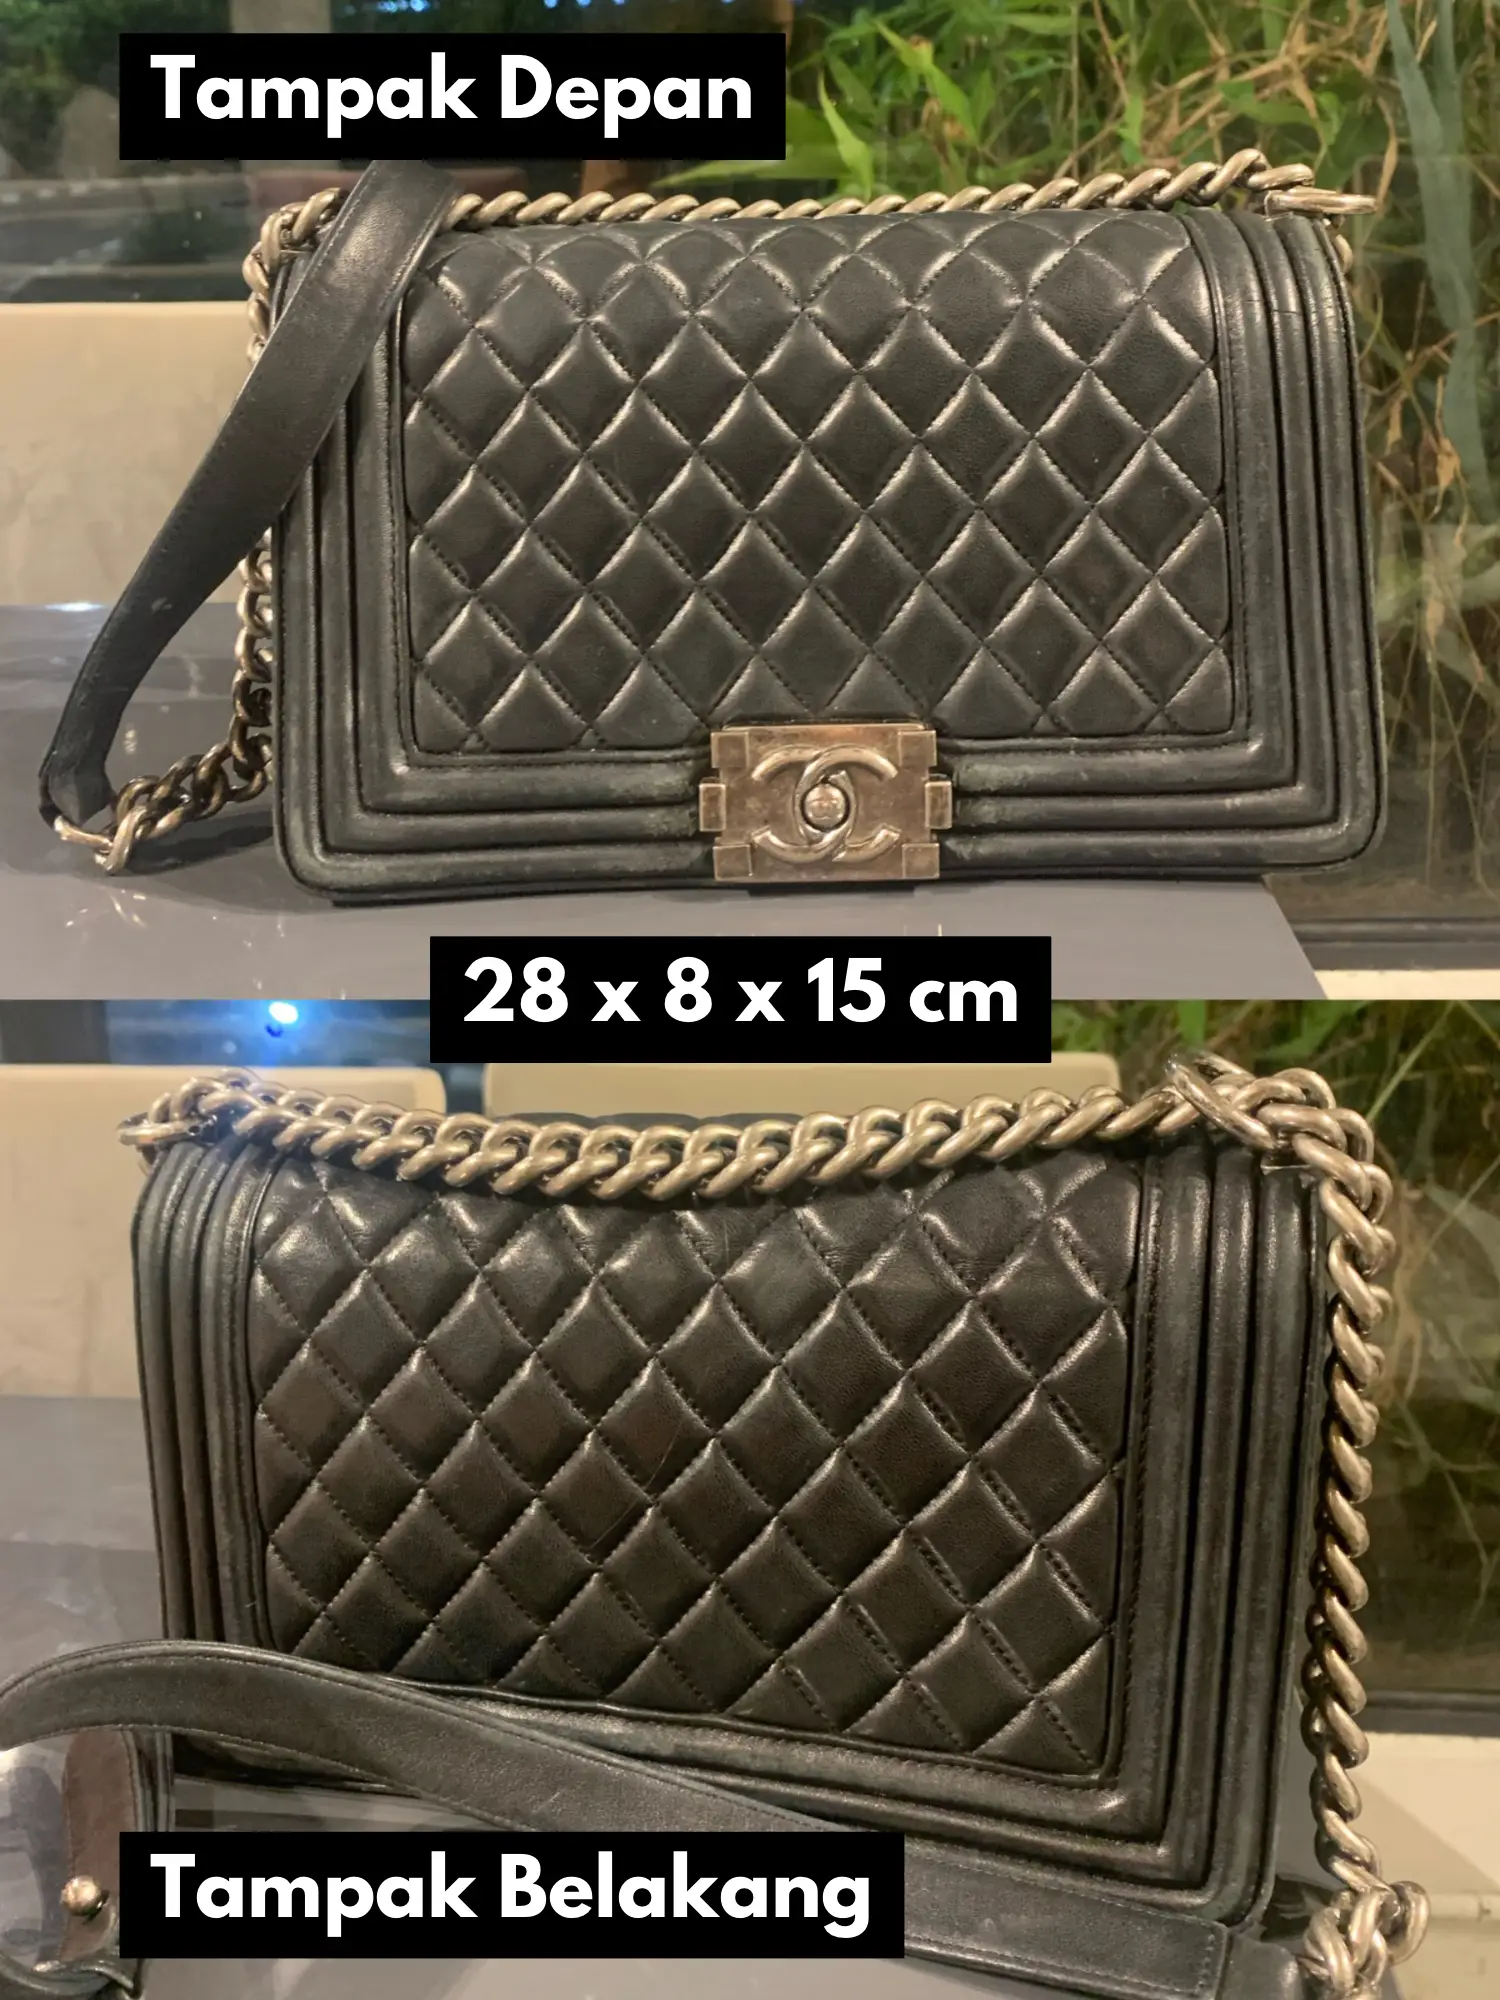 Luxury Bag Review: Chanel Boy, Gallery posted by Amanda Nachila